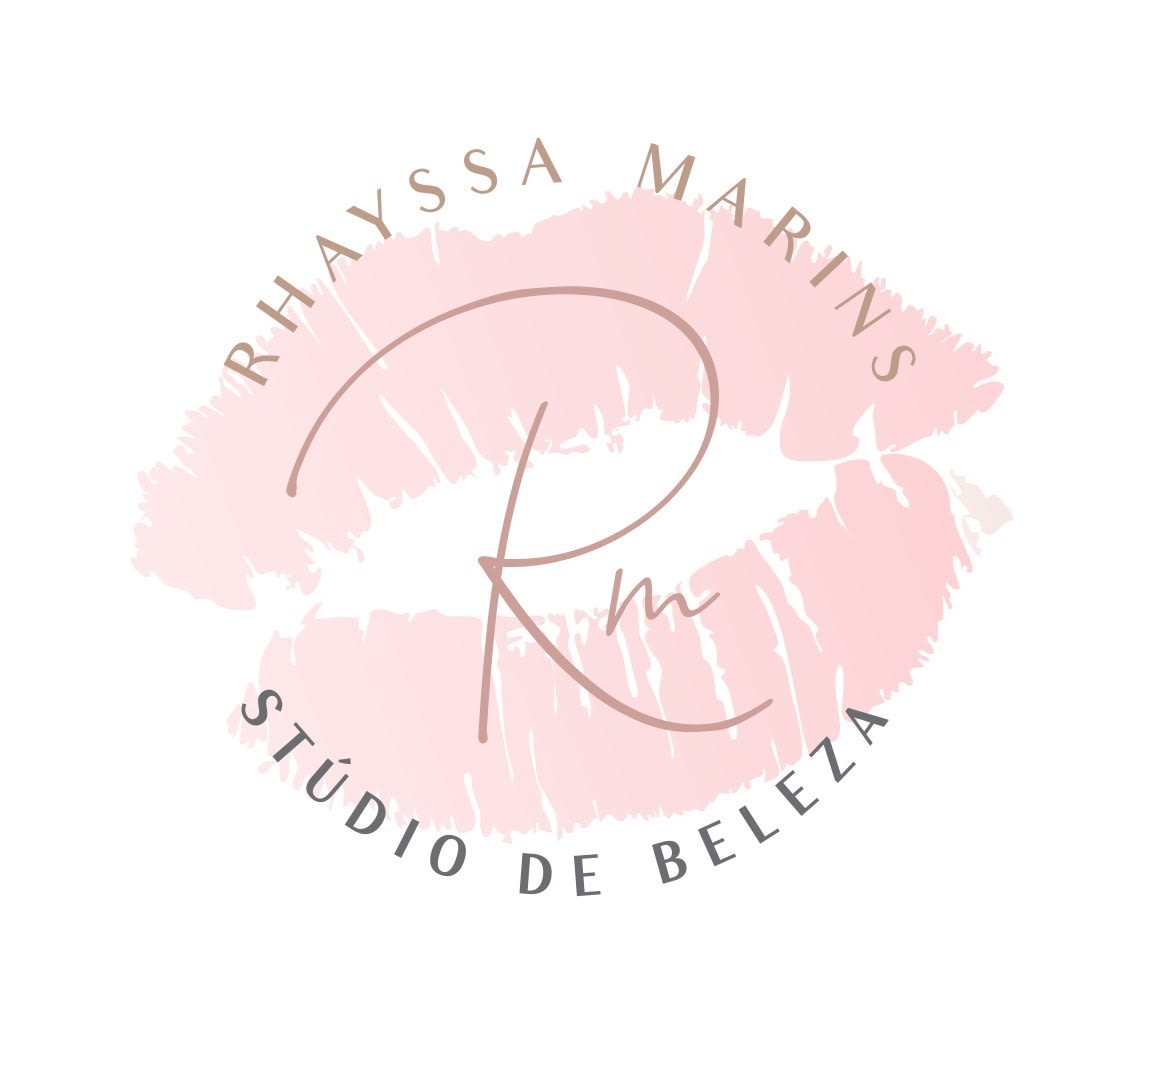 Rhayssa Marins Studio de Beleza